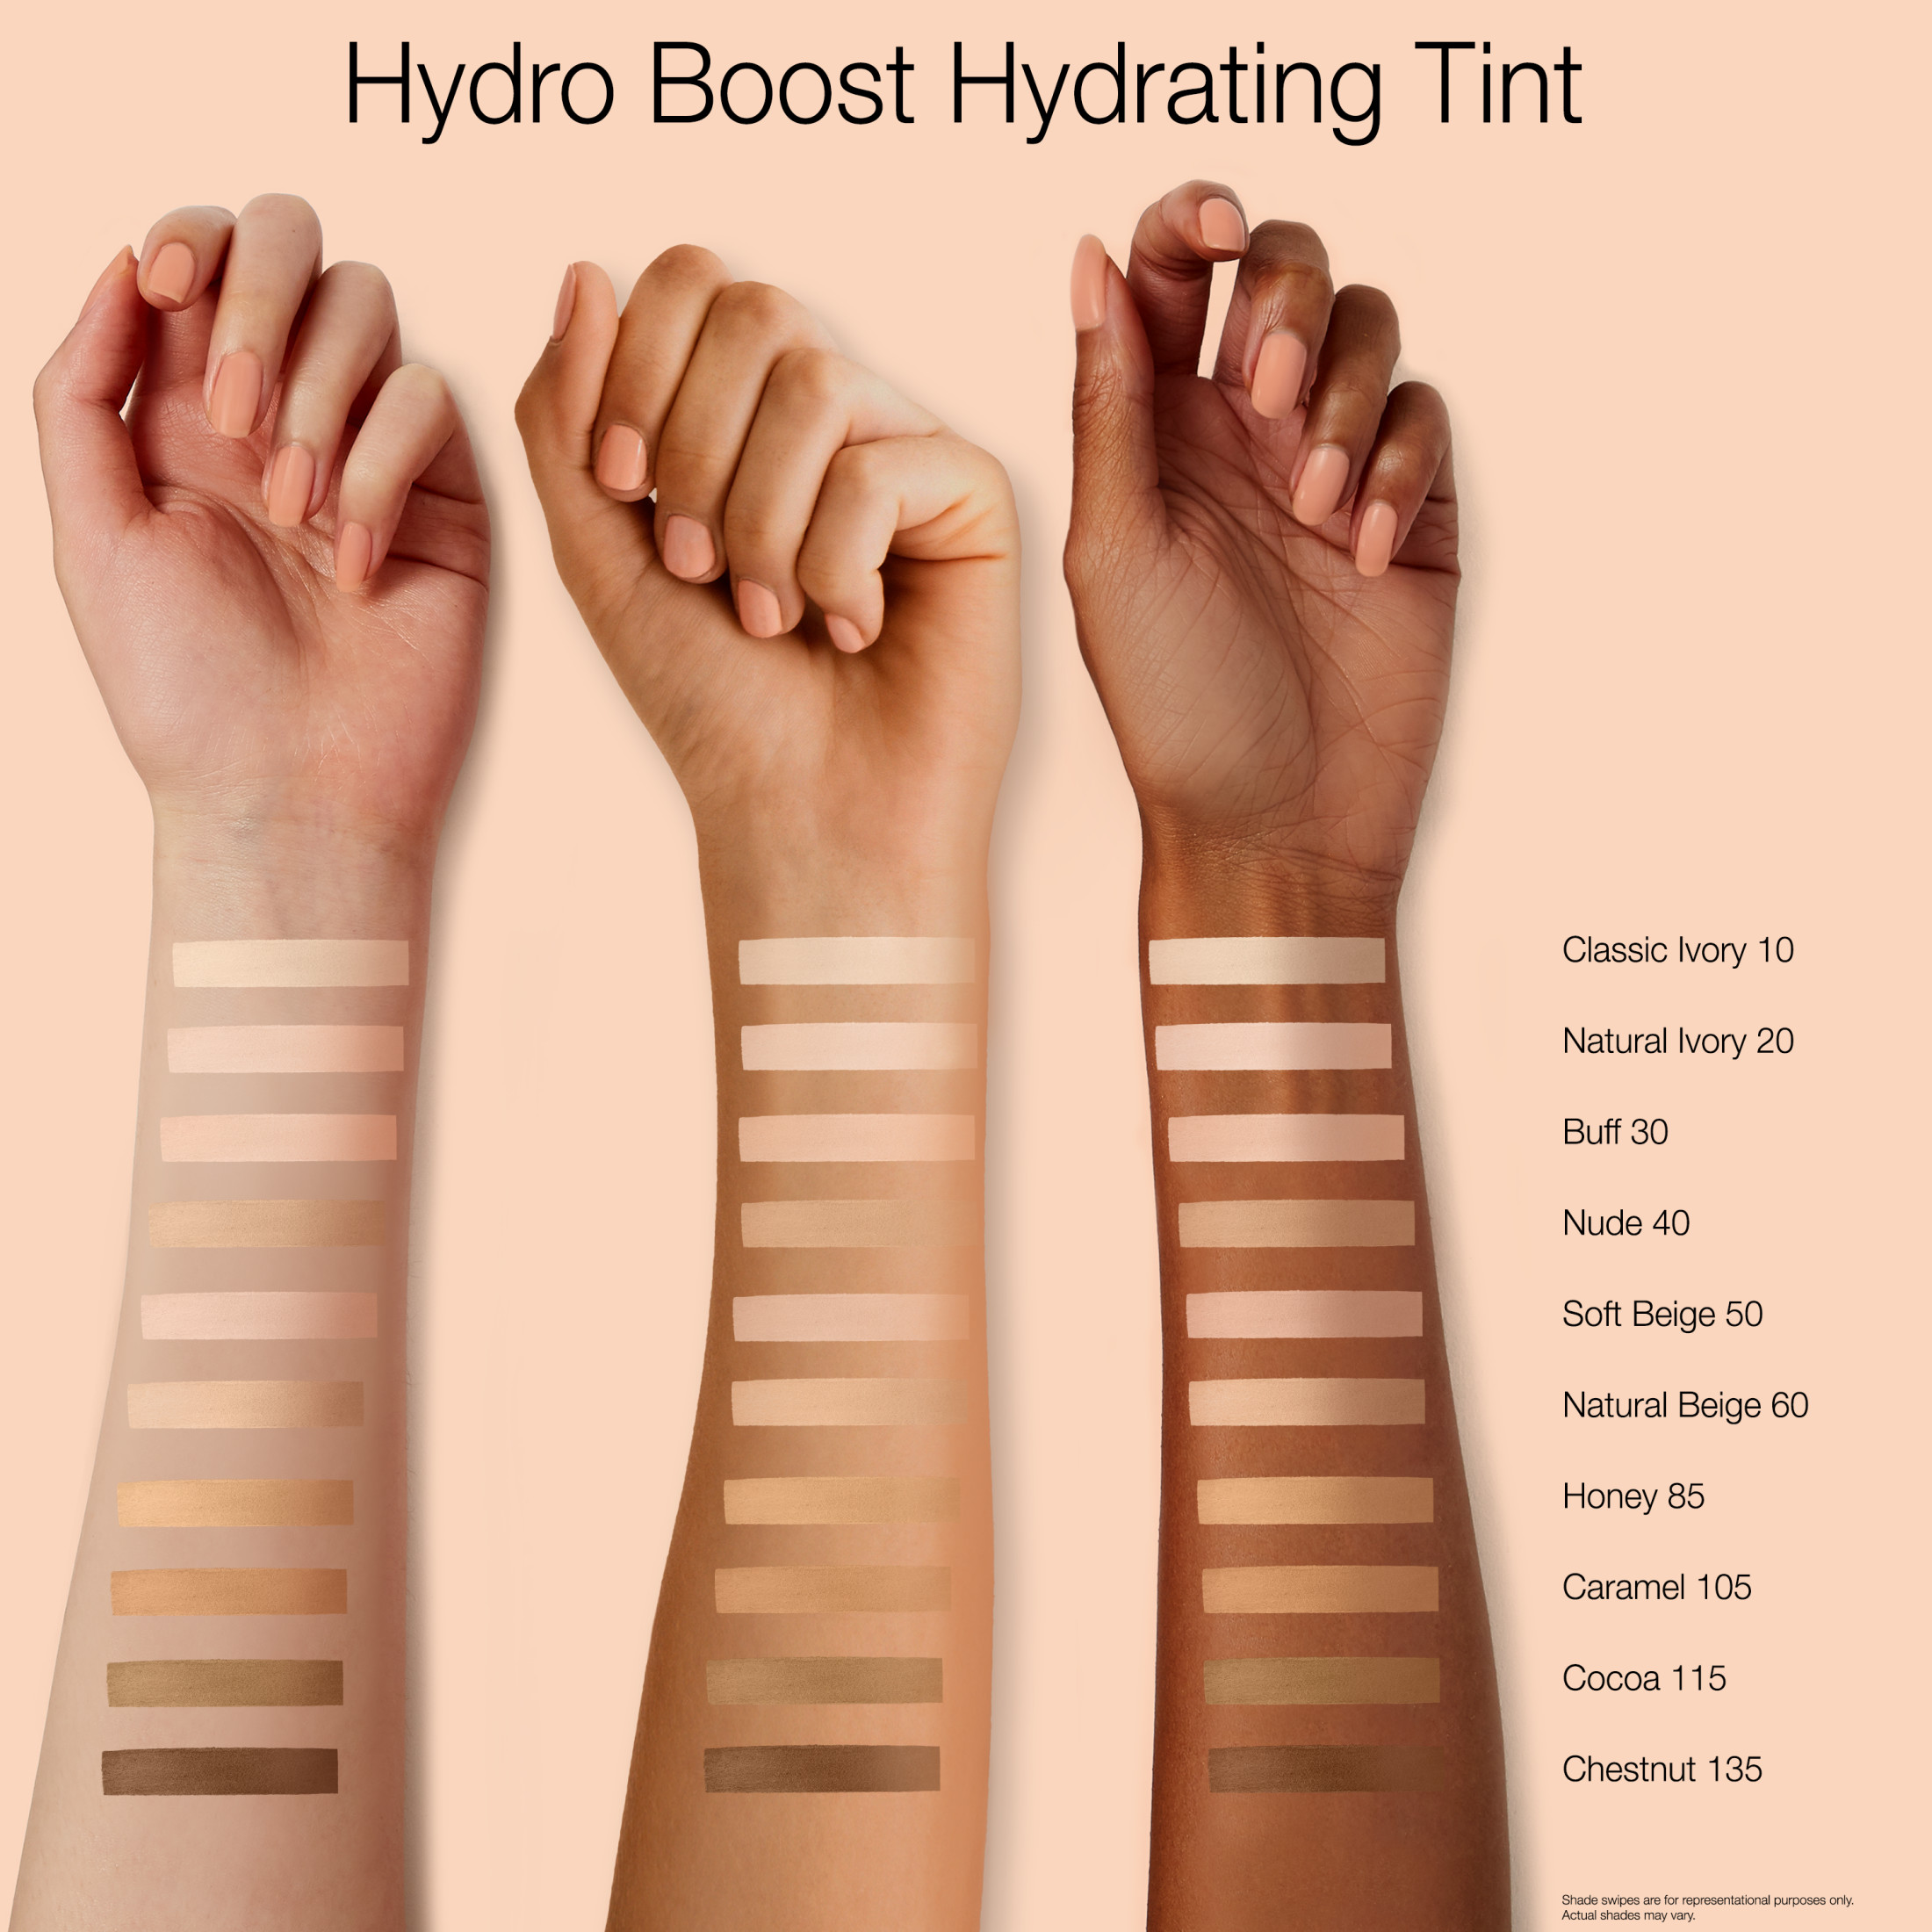 Neutrogena Hydro Boost Hydrating Tint, 115 Cocoa, 1.0 fl. oz - image 5 of 14